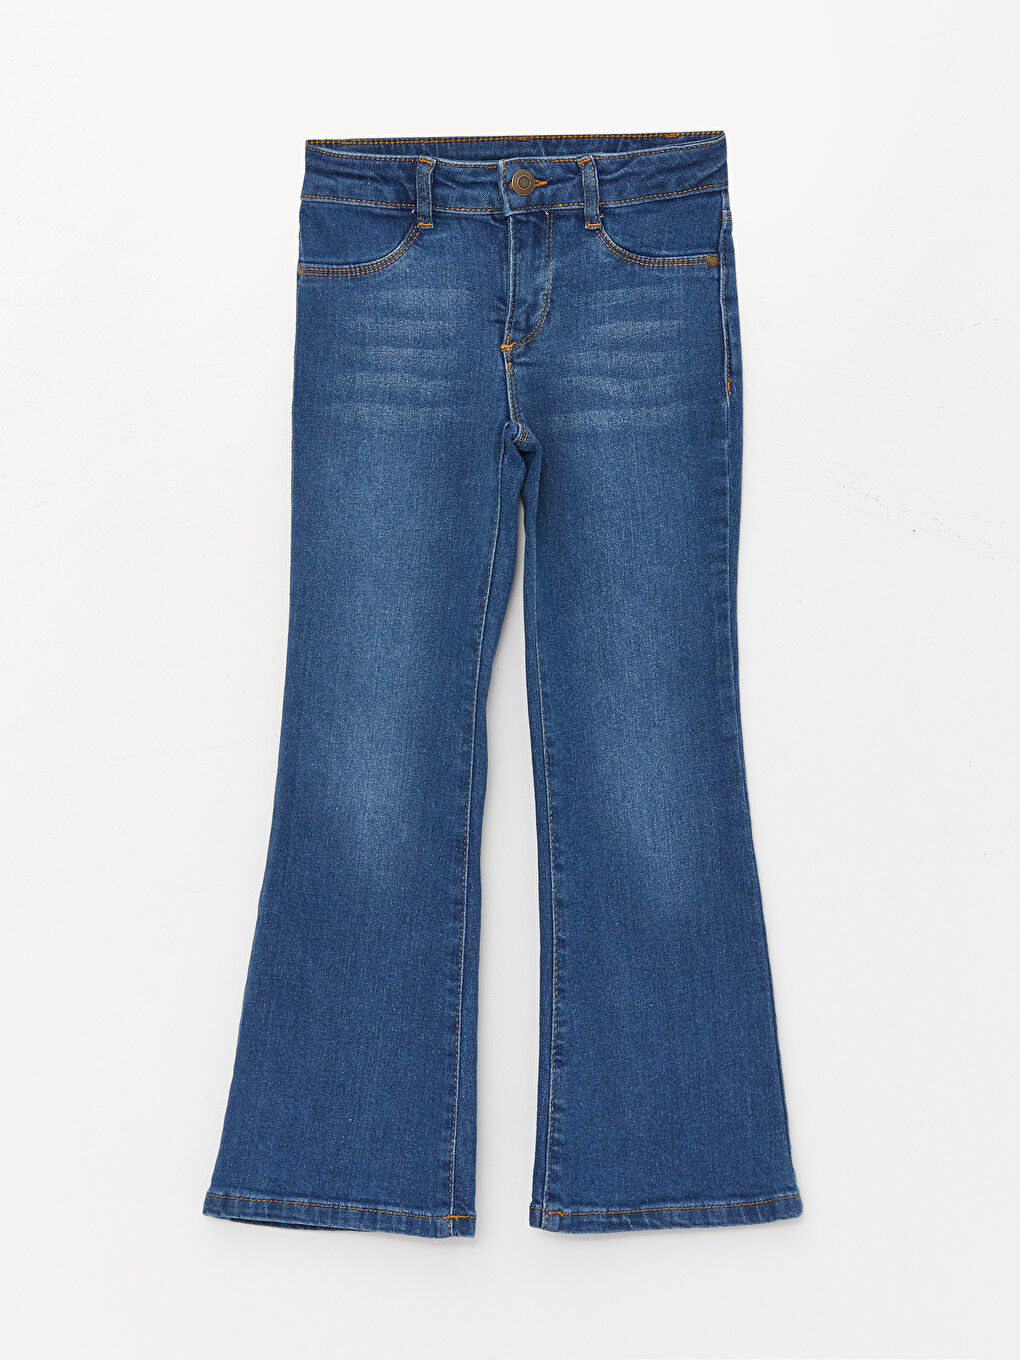 Simpl Young Ladies Denim Jeans Blue Distressed Stretch Size Juniors 1 | eBay